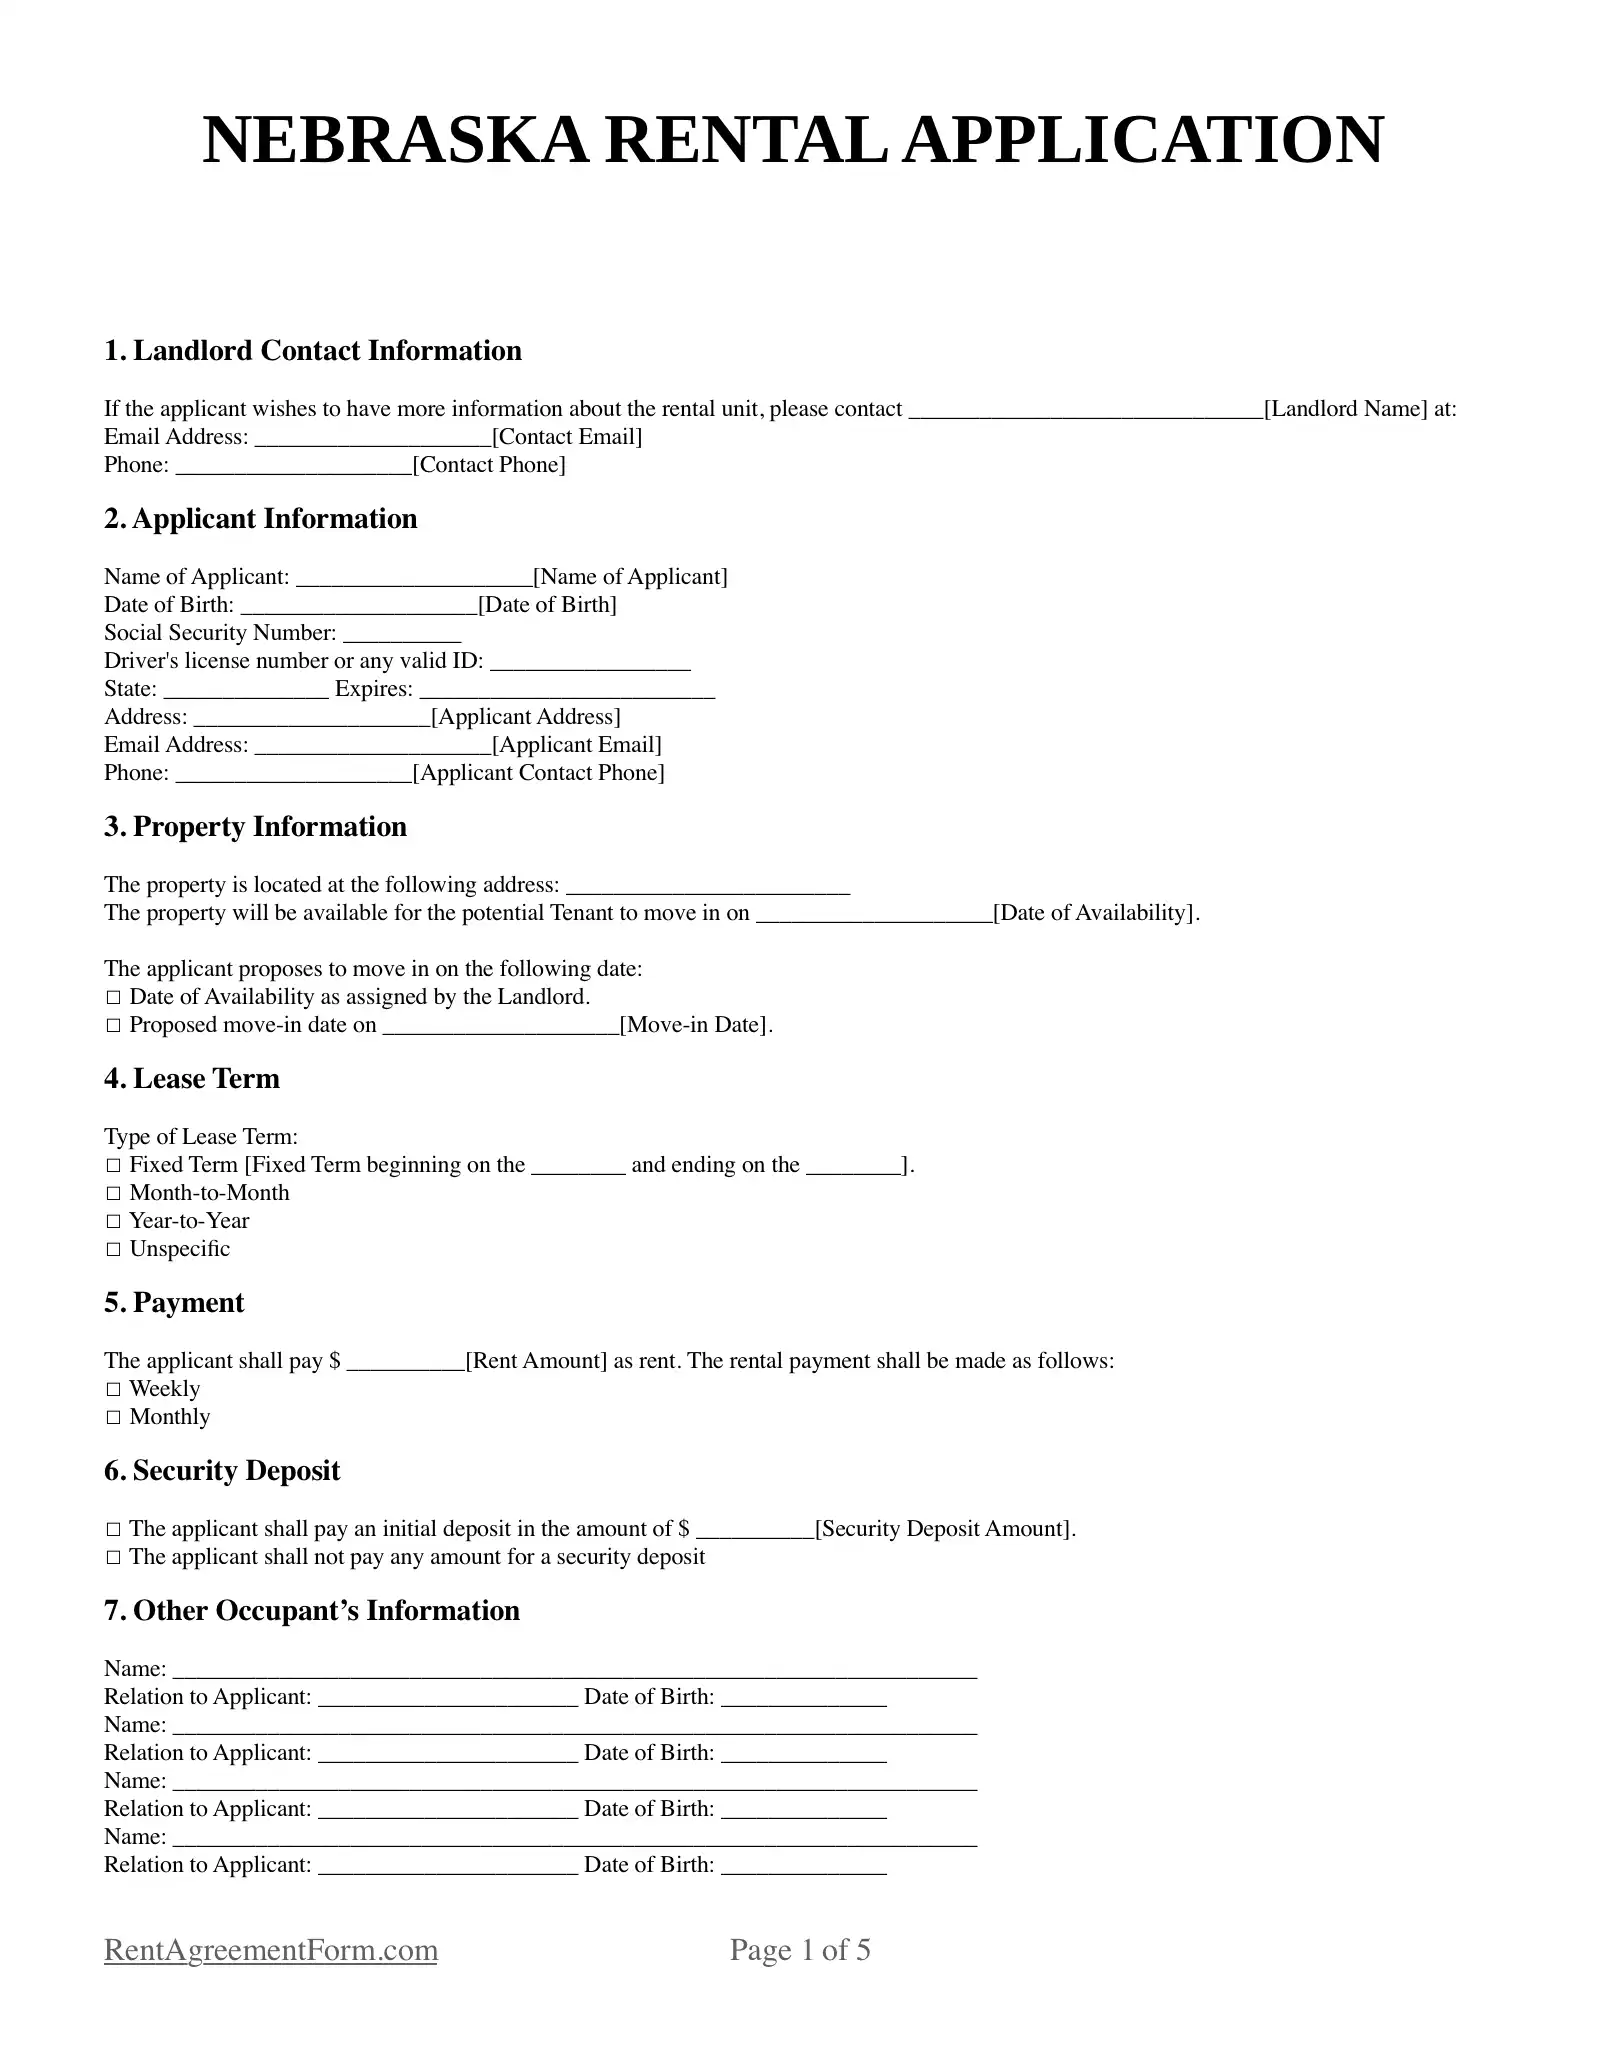 Nebraska Rental Application Sample